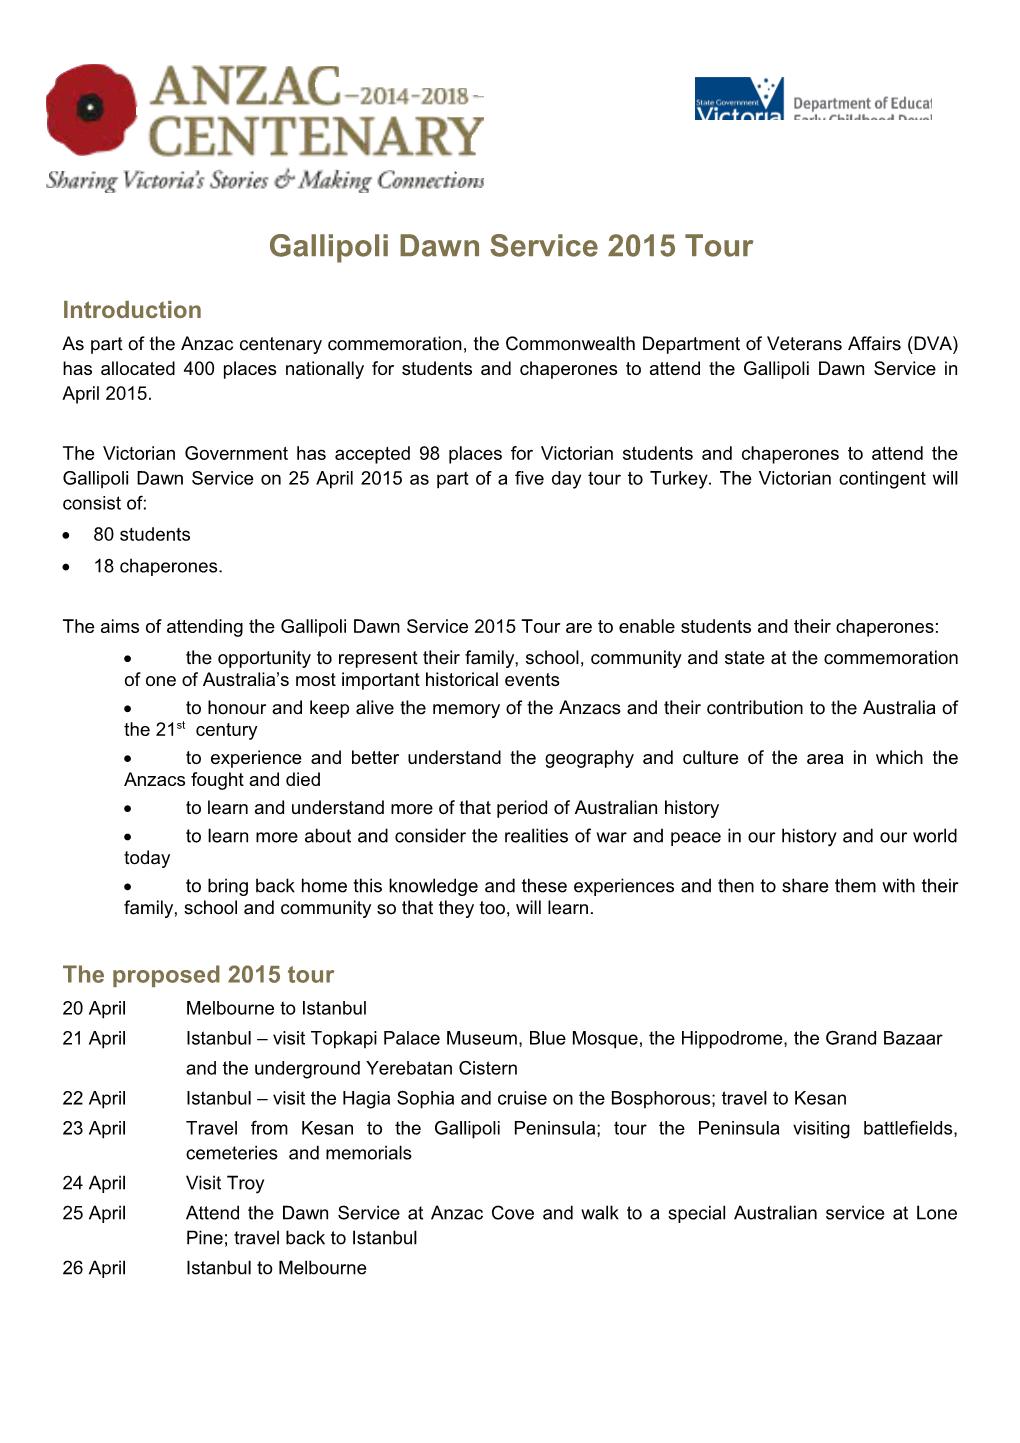 Gallipoli Dawn Service 2015 Tour